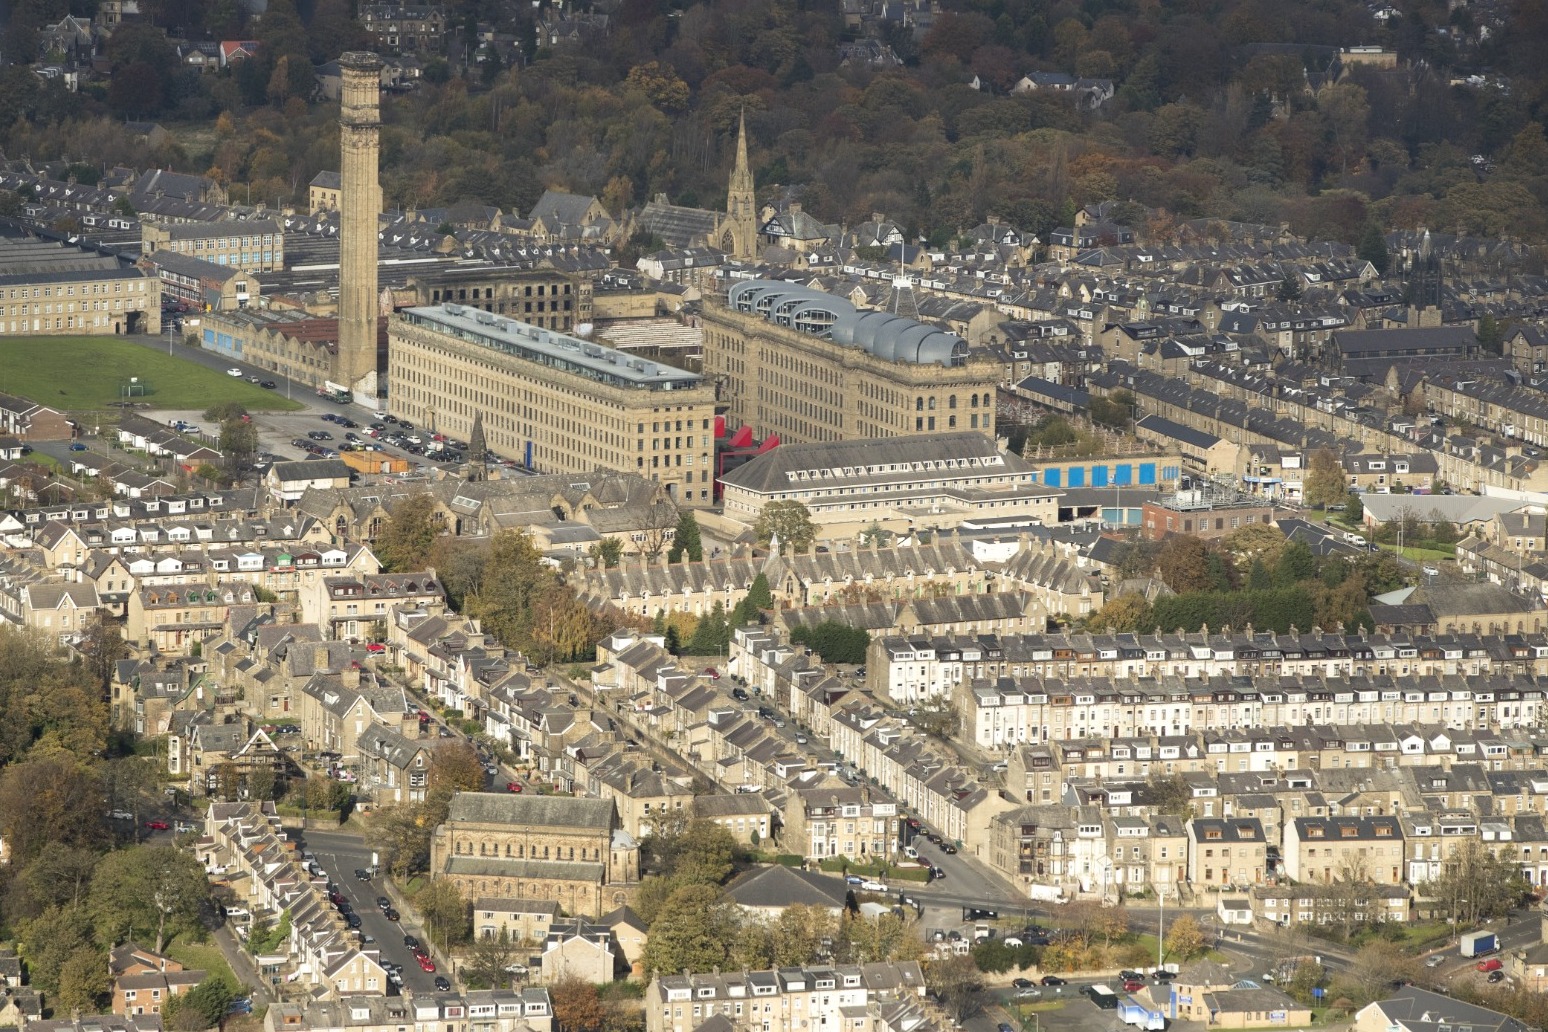 Bradford named UK City of Culture 2025 